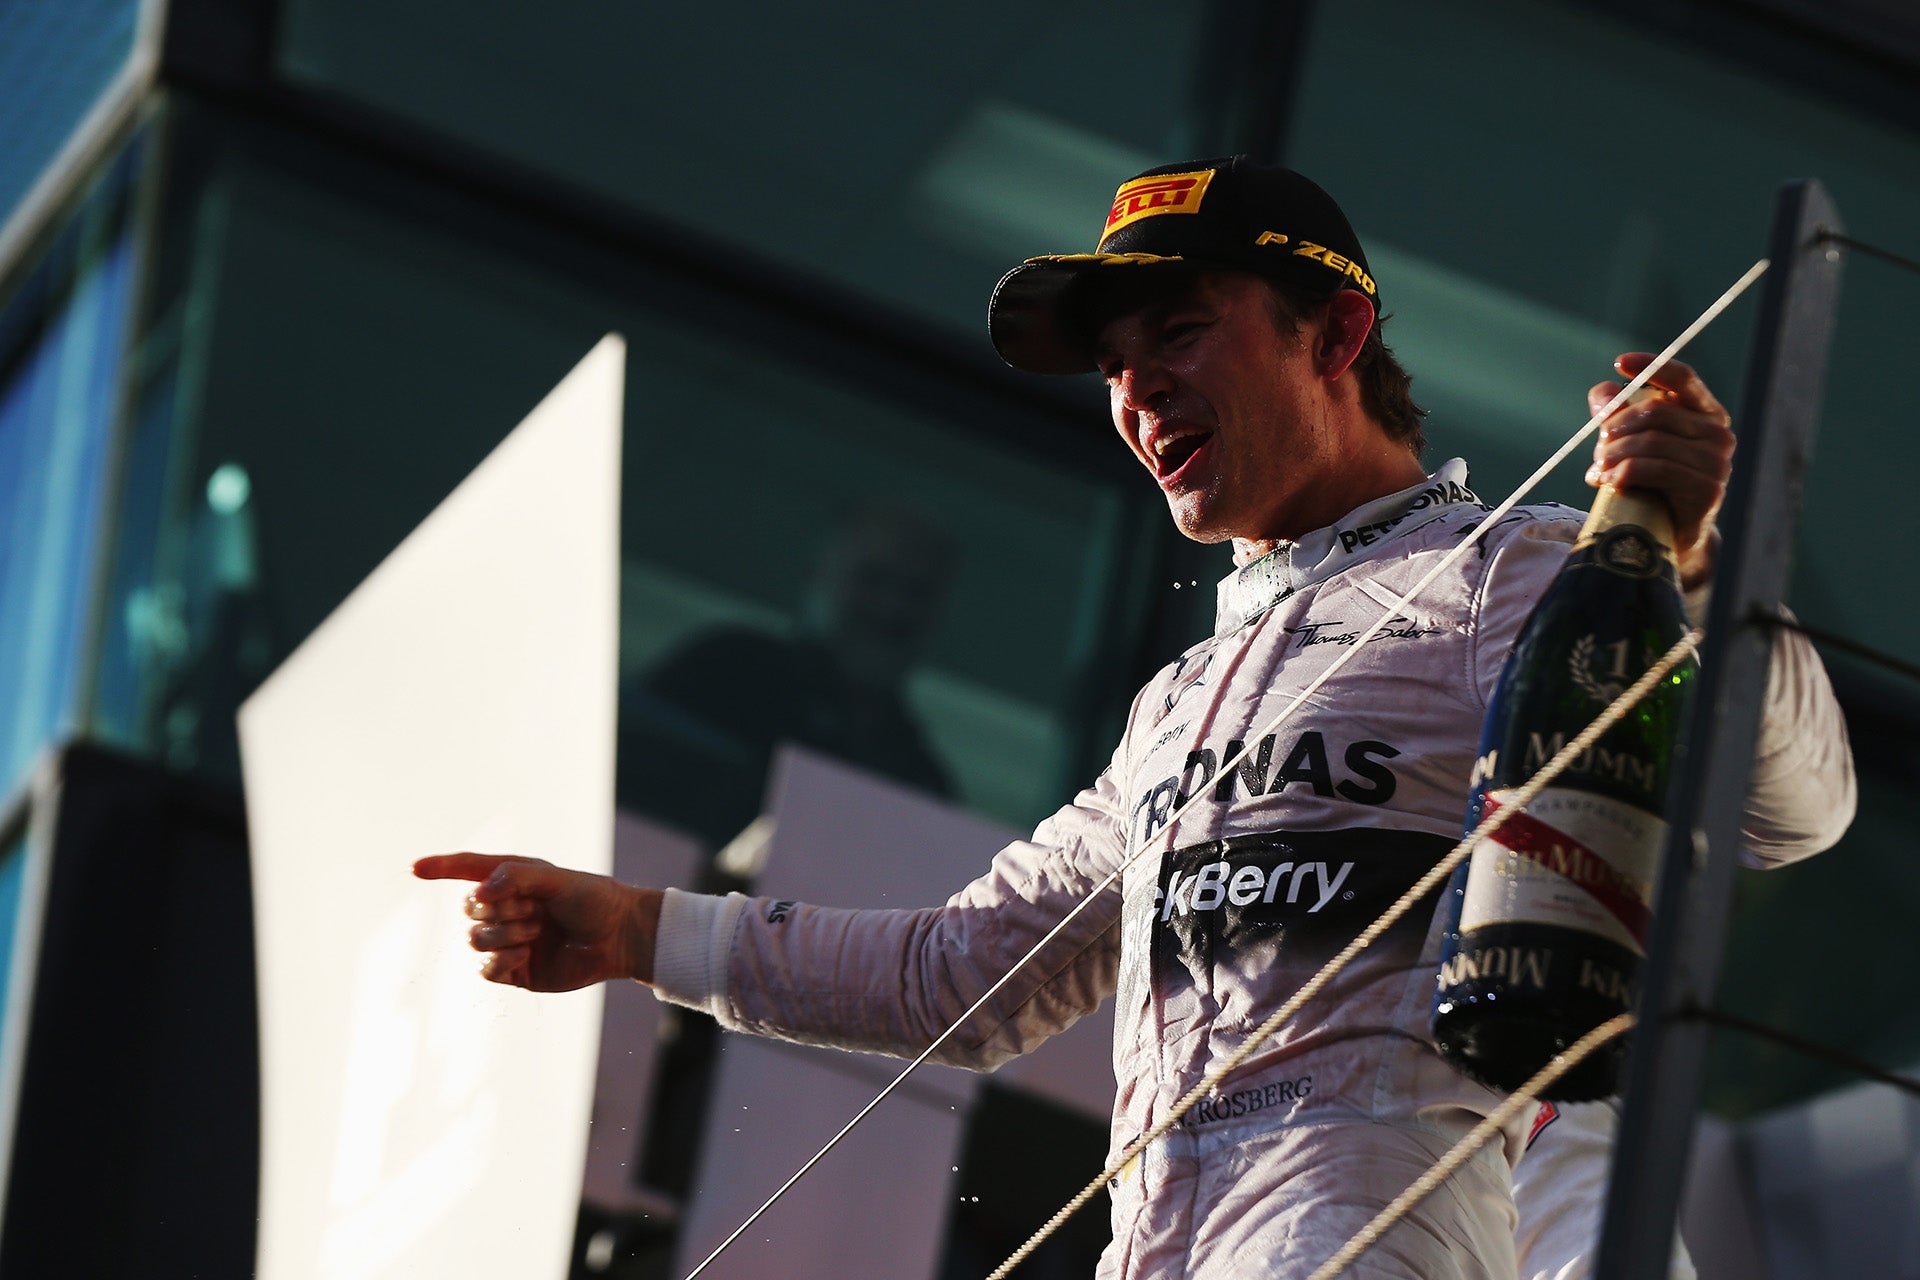 The F1 Australian Grand Prix In Pictures